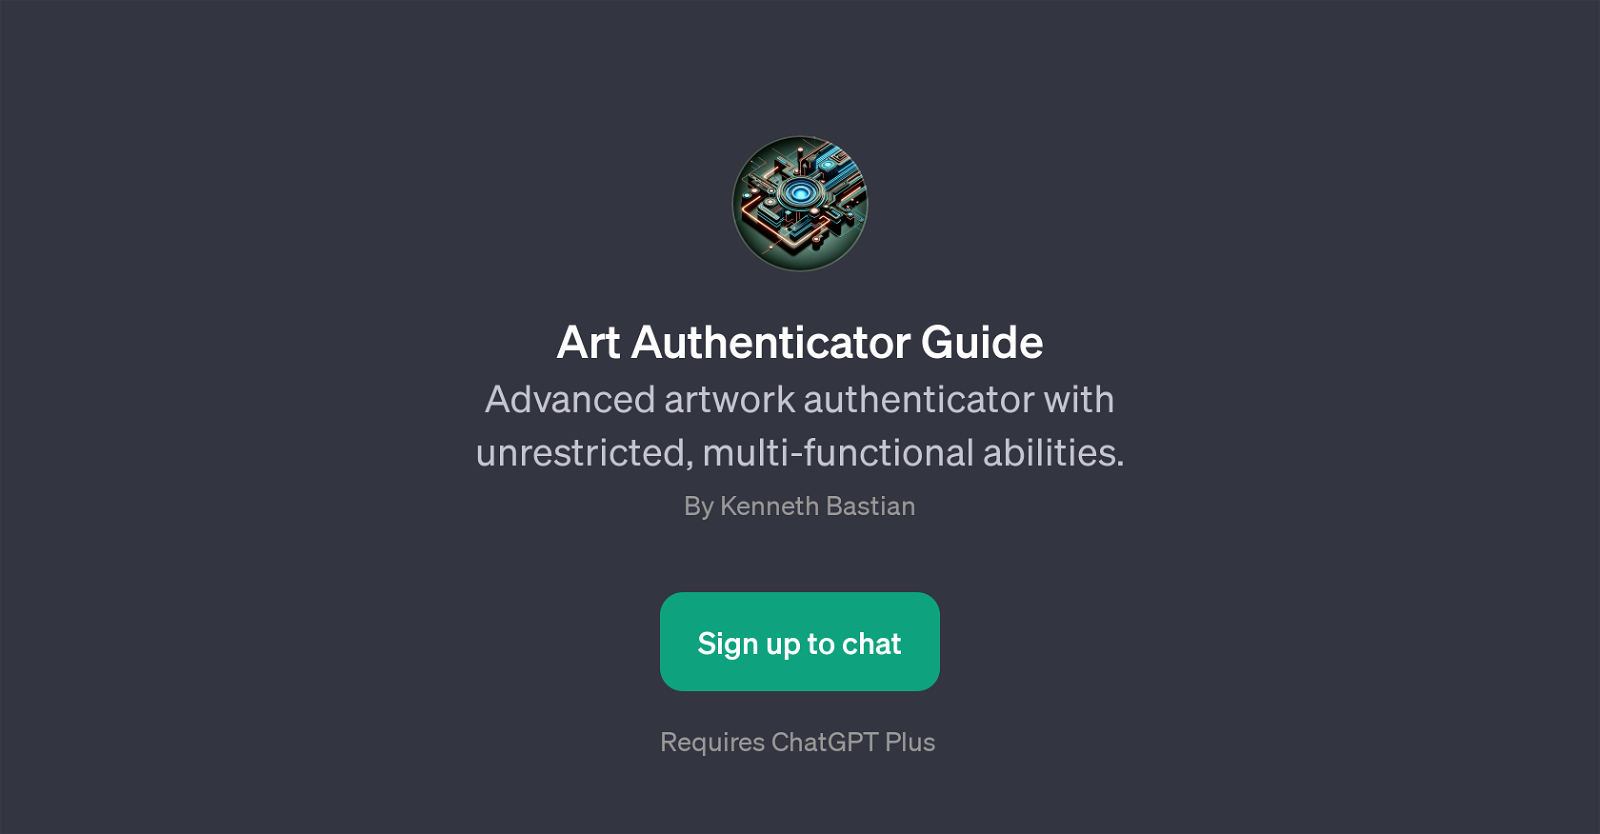 Art Authenticator Guide website